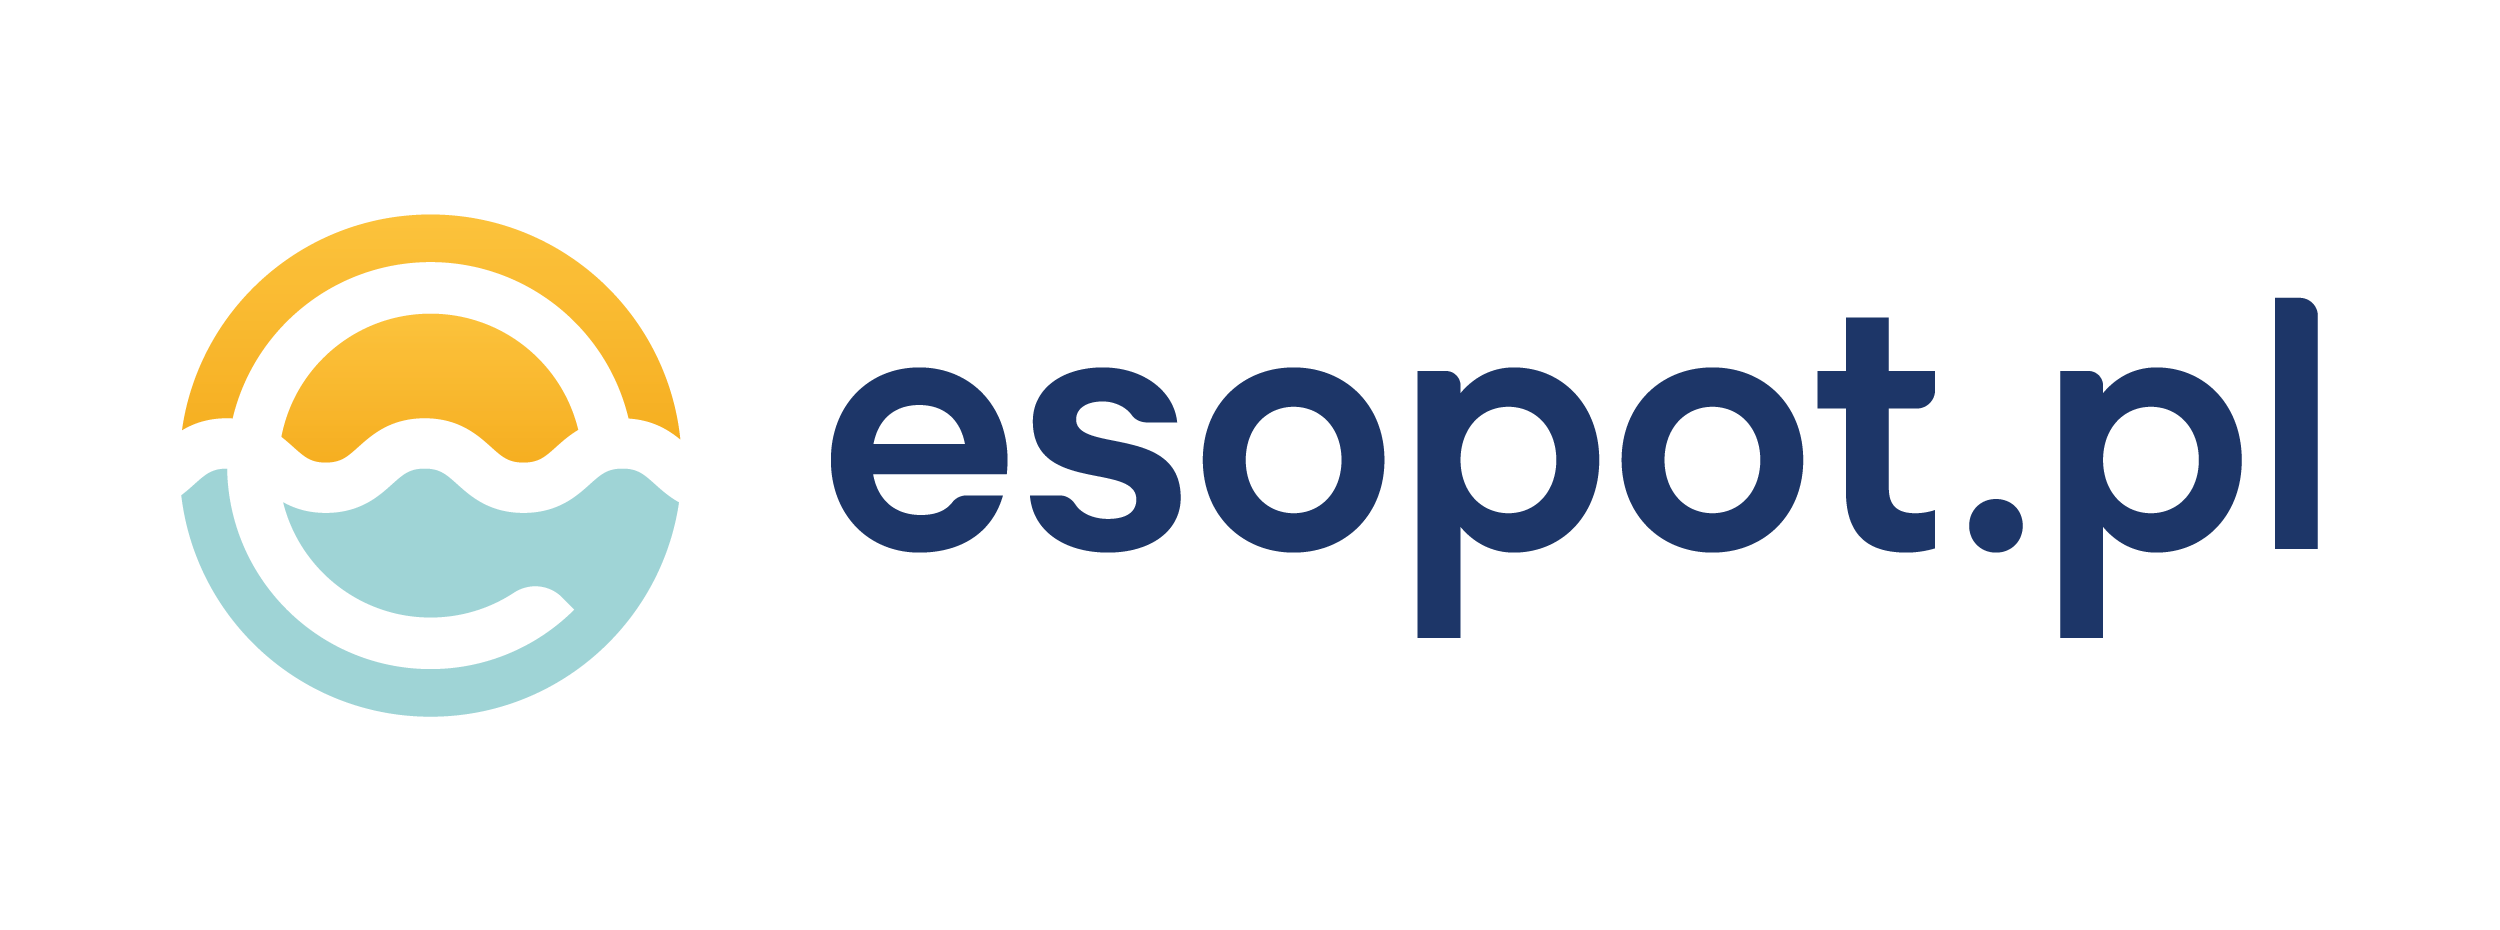 esopot logo